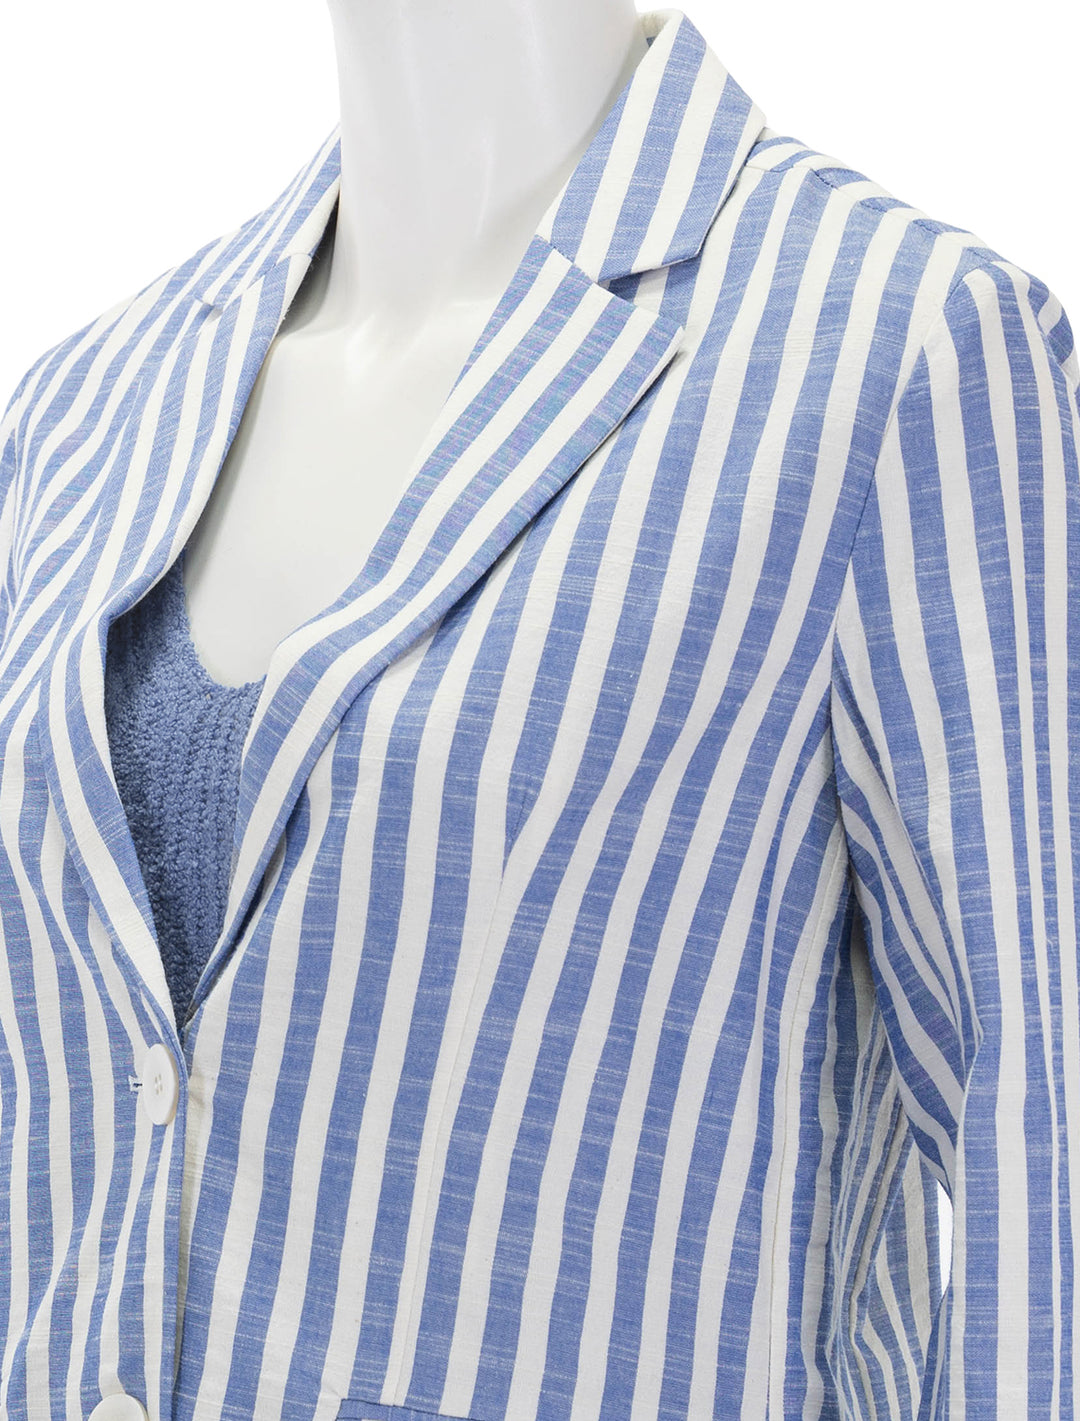 Close-up view of Nation LTD's beau blazer in parisian blue stripe.